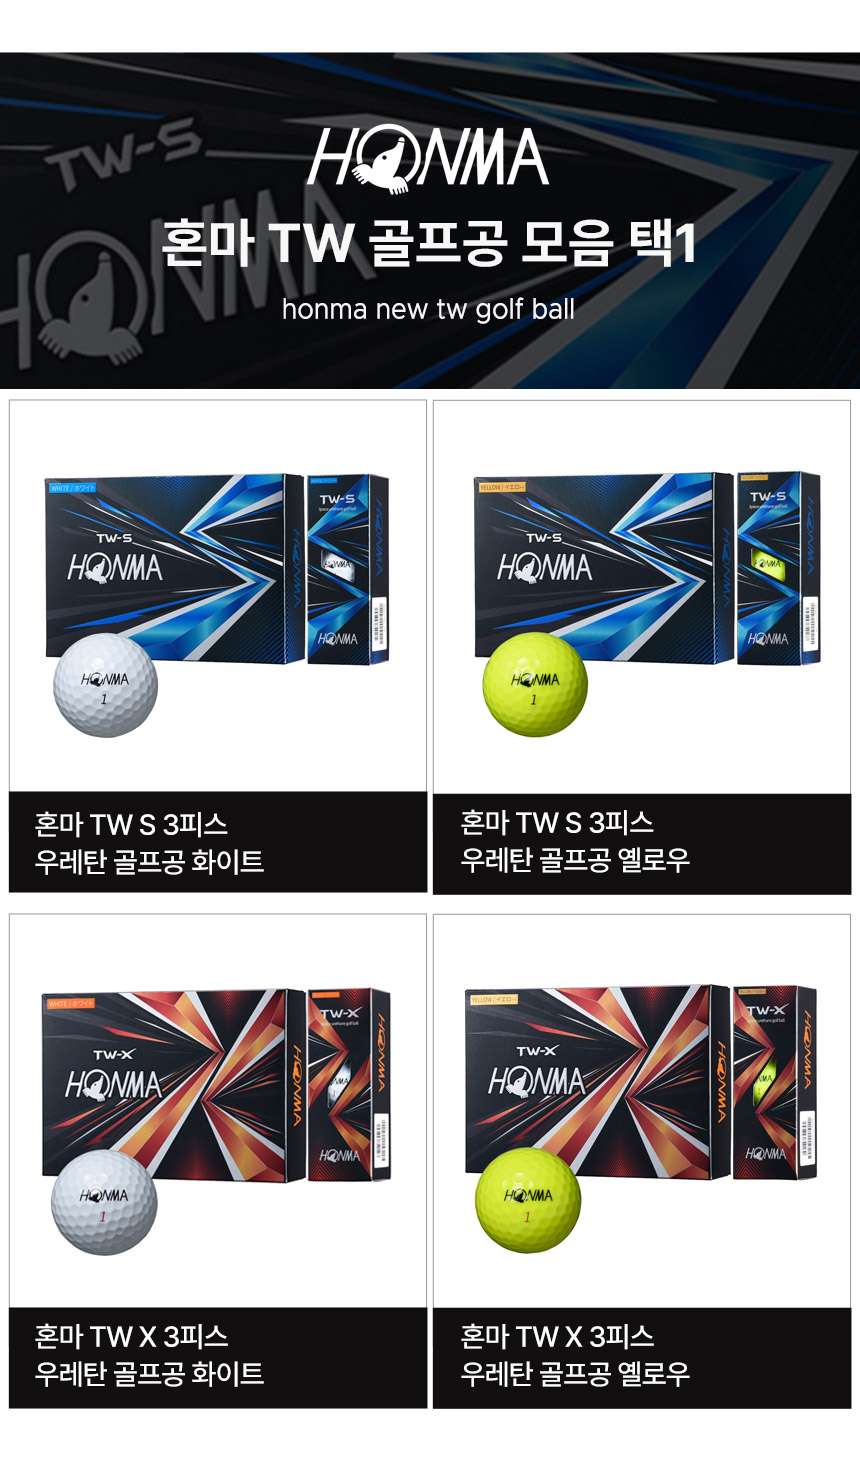 honma_new_tw_x_s_golf_ball_set_list_23.jpg